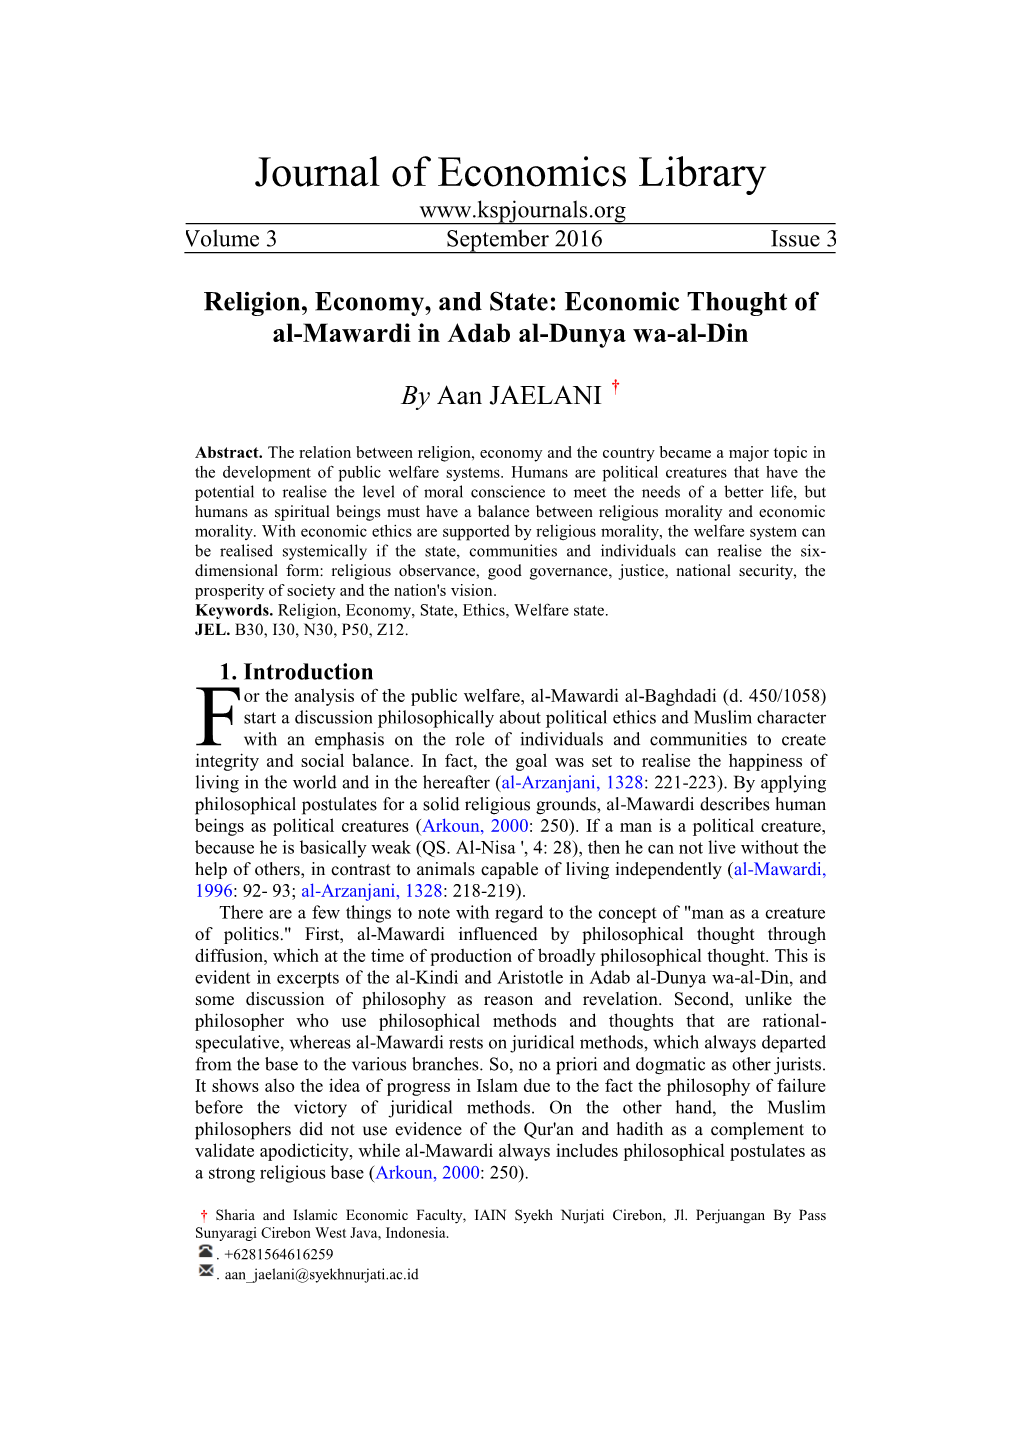 Journal of Economics Library Volume 3 September 2016 Issue 3